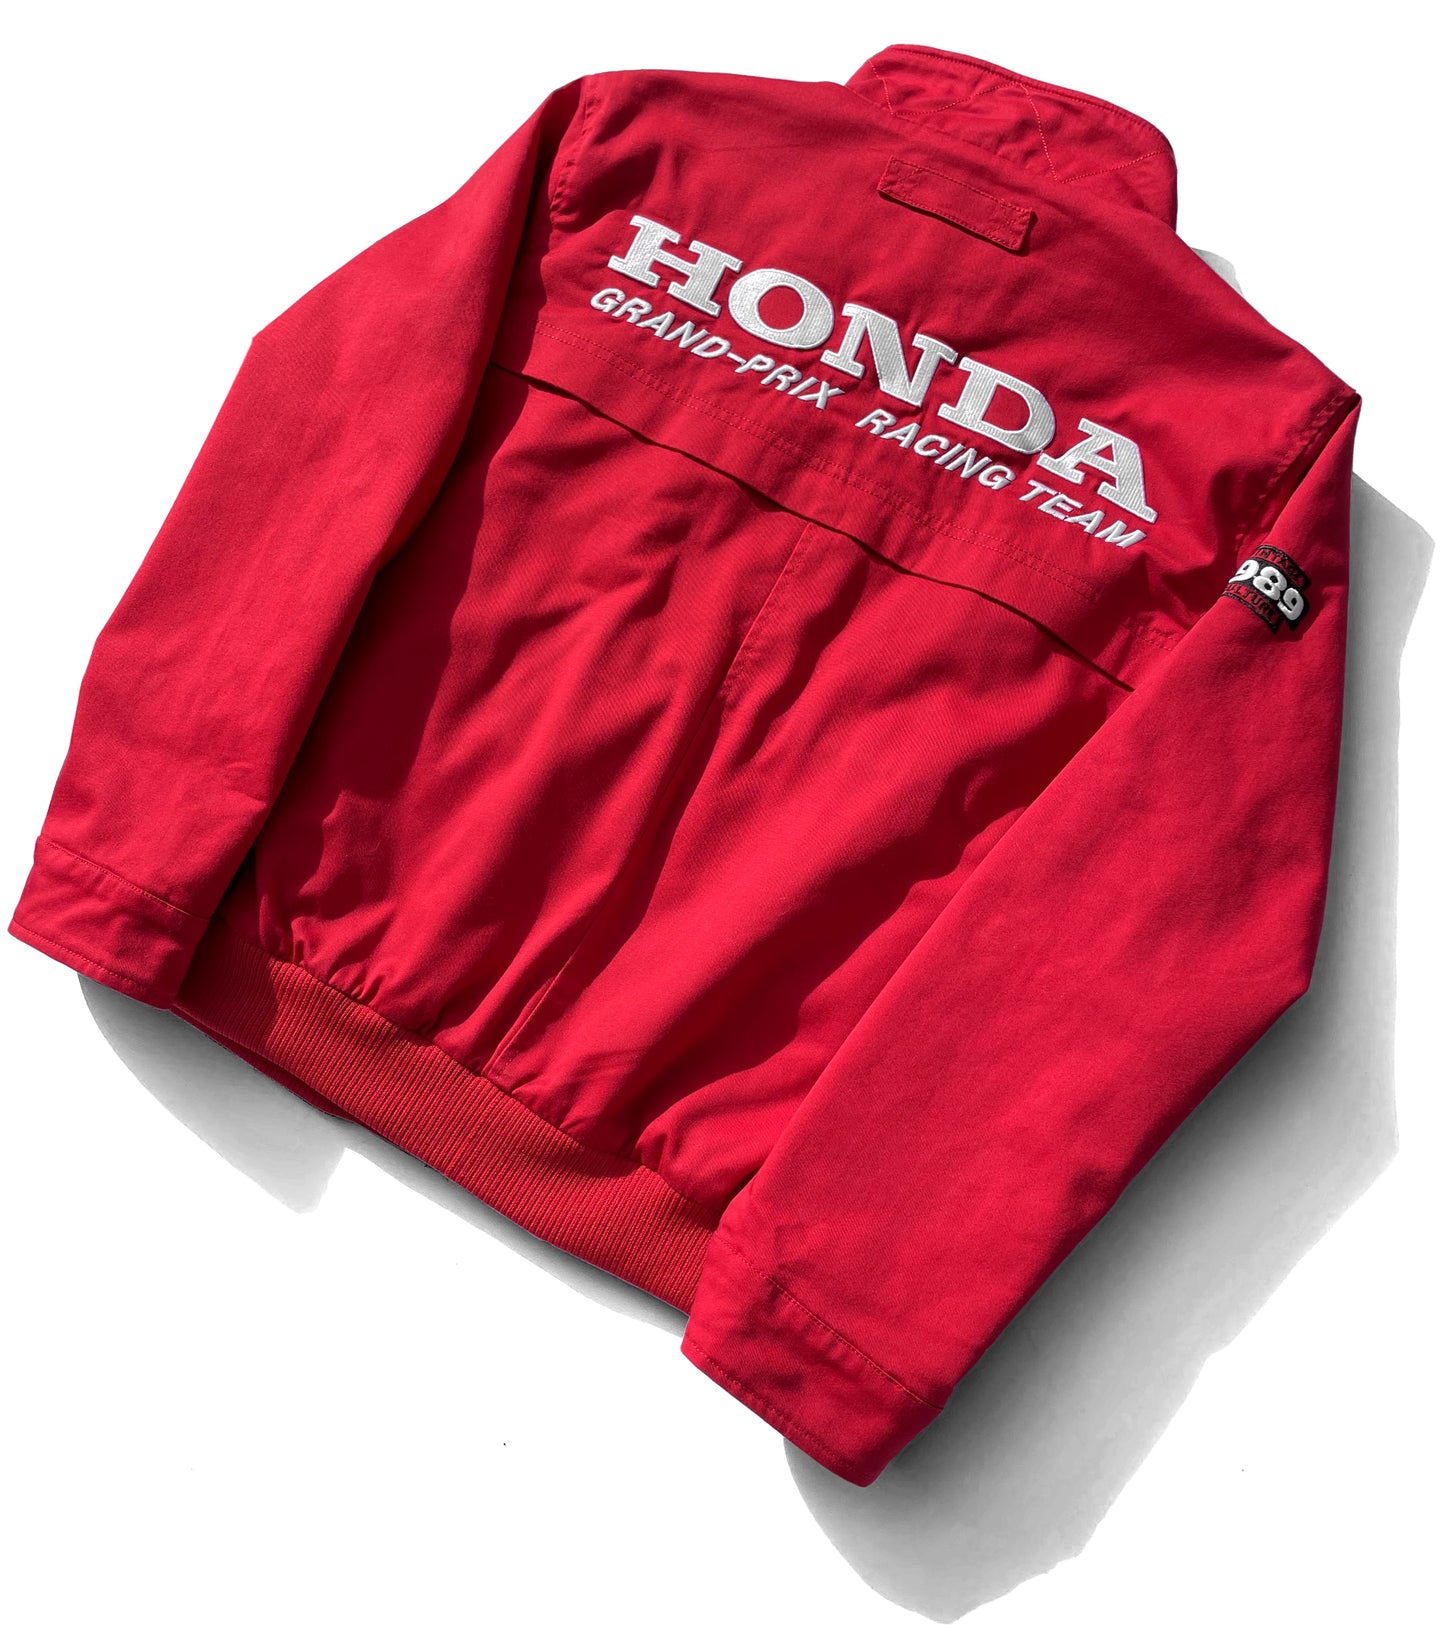 1989 Honda Grand Prix Racing Team Twill Jacket